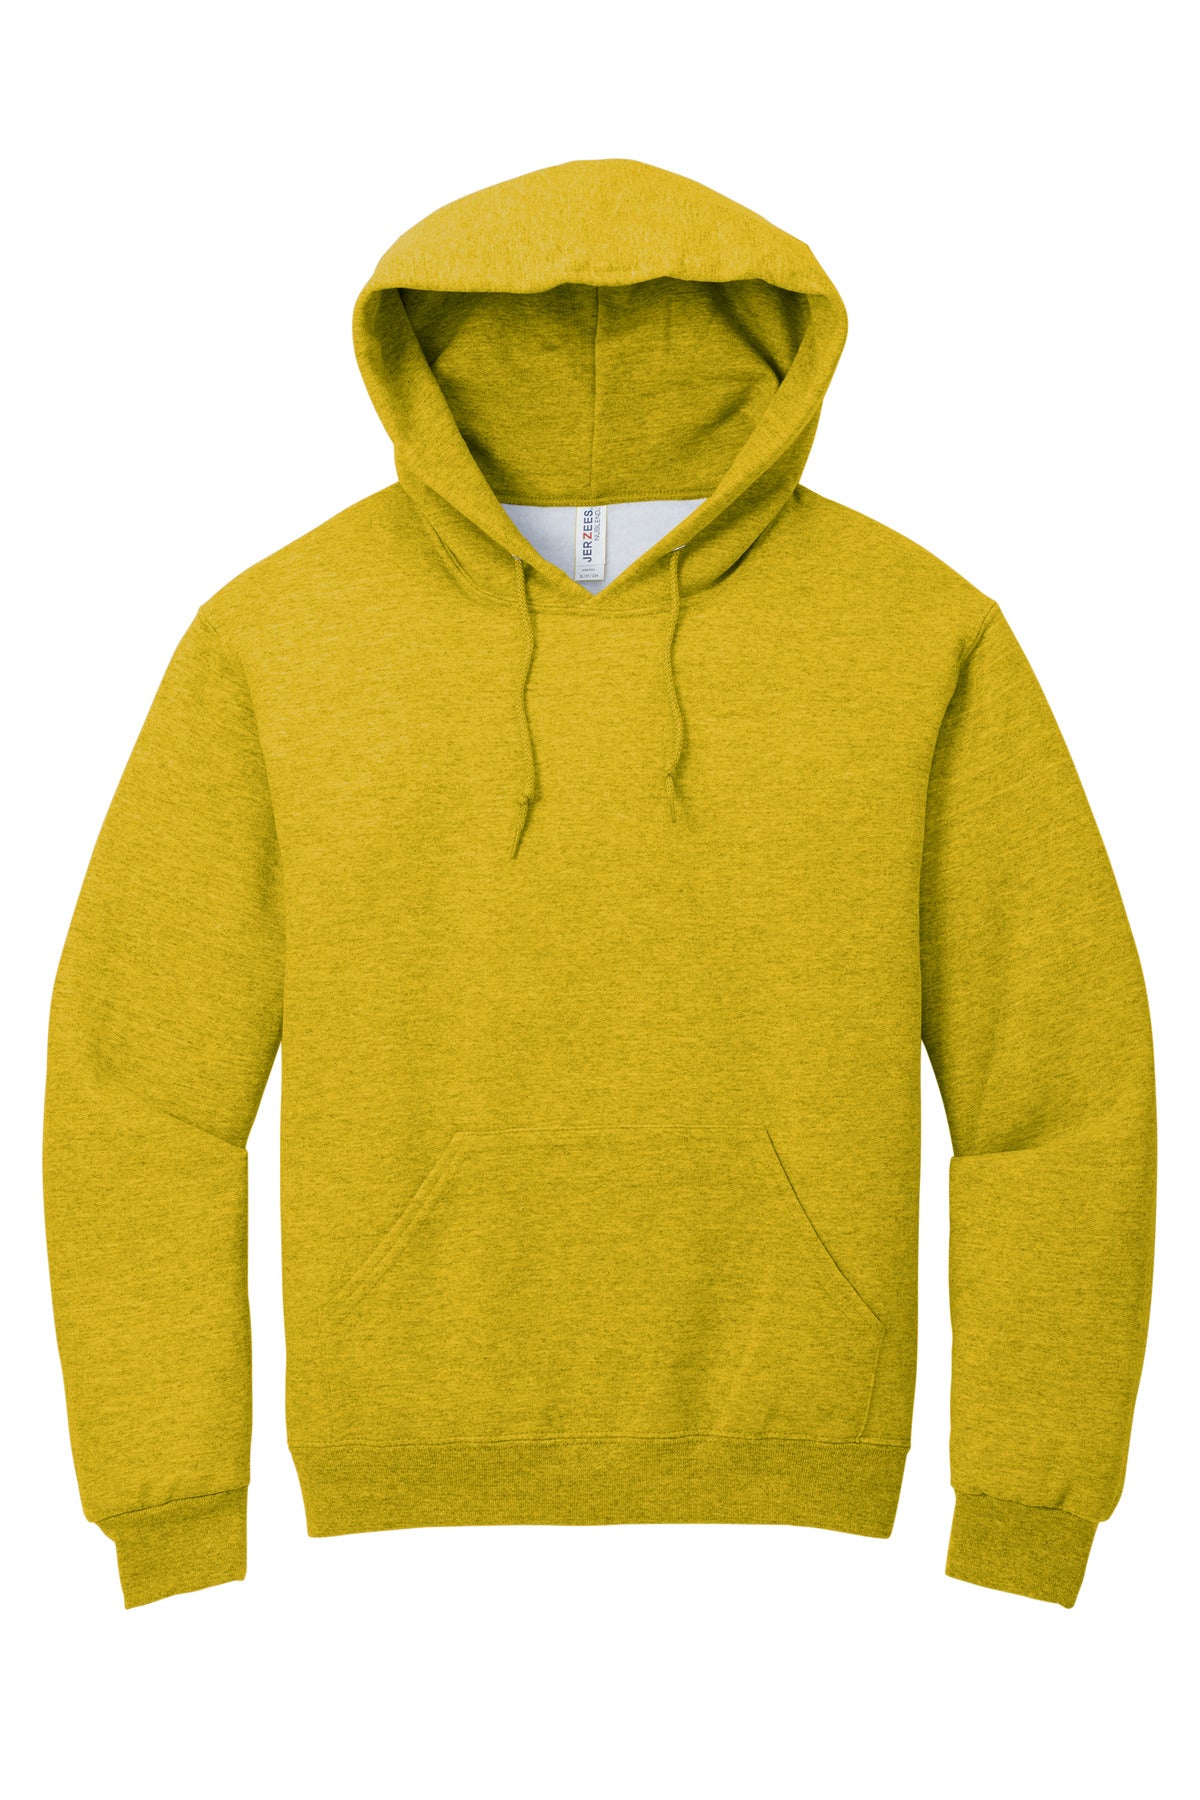 Jerzees - NuBlend Pullover Hooded Sweatshirt. 996M - Mustard Heather